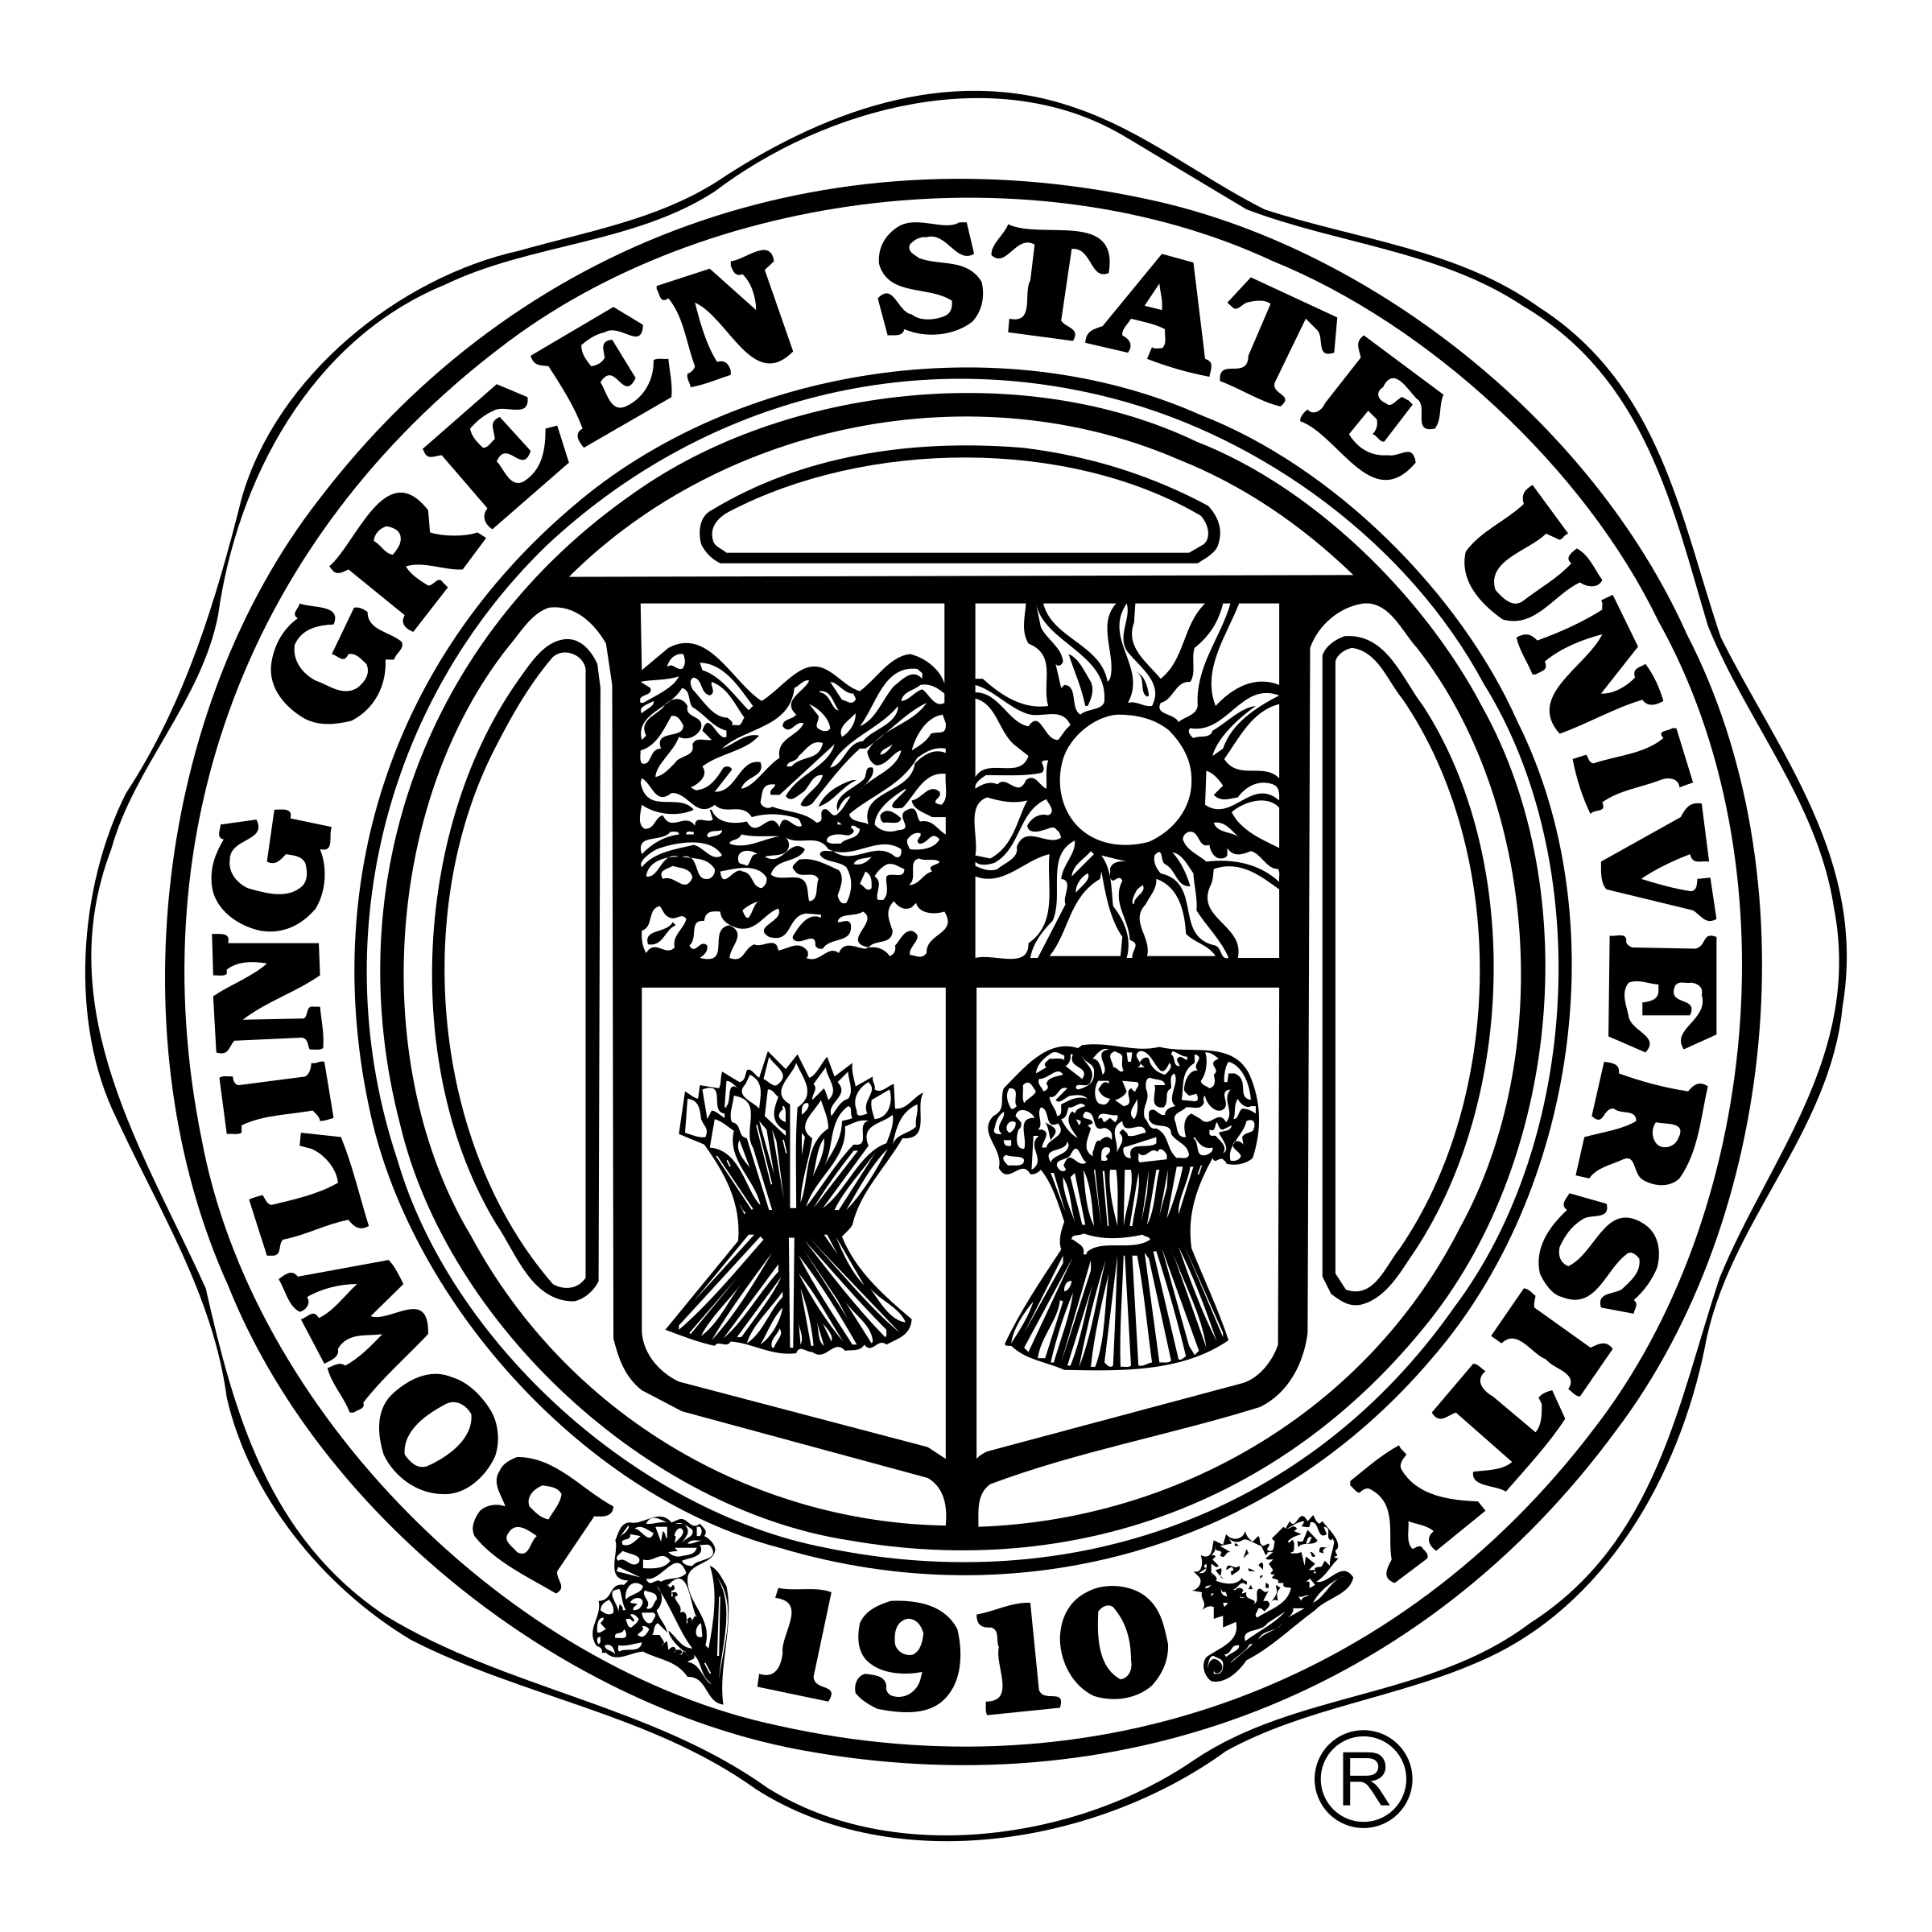 Bowling Green State University 02 Logo PNG Transparent & SVG.